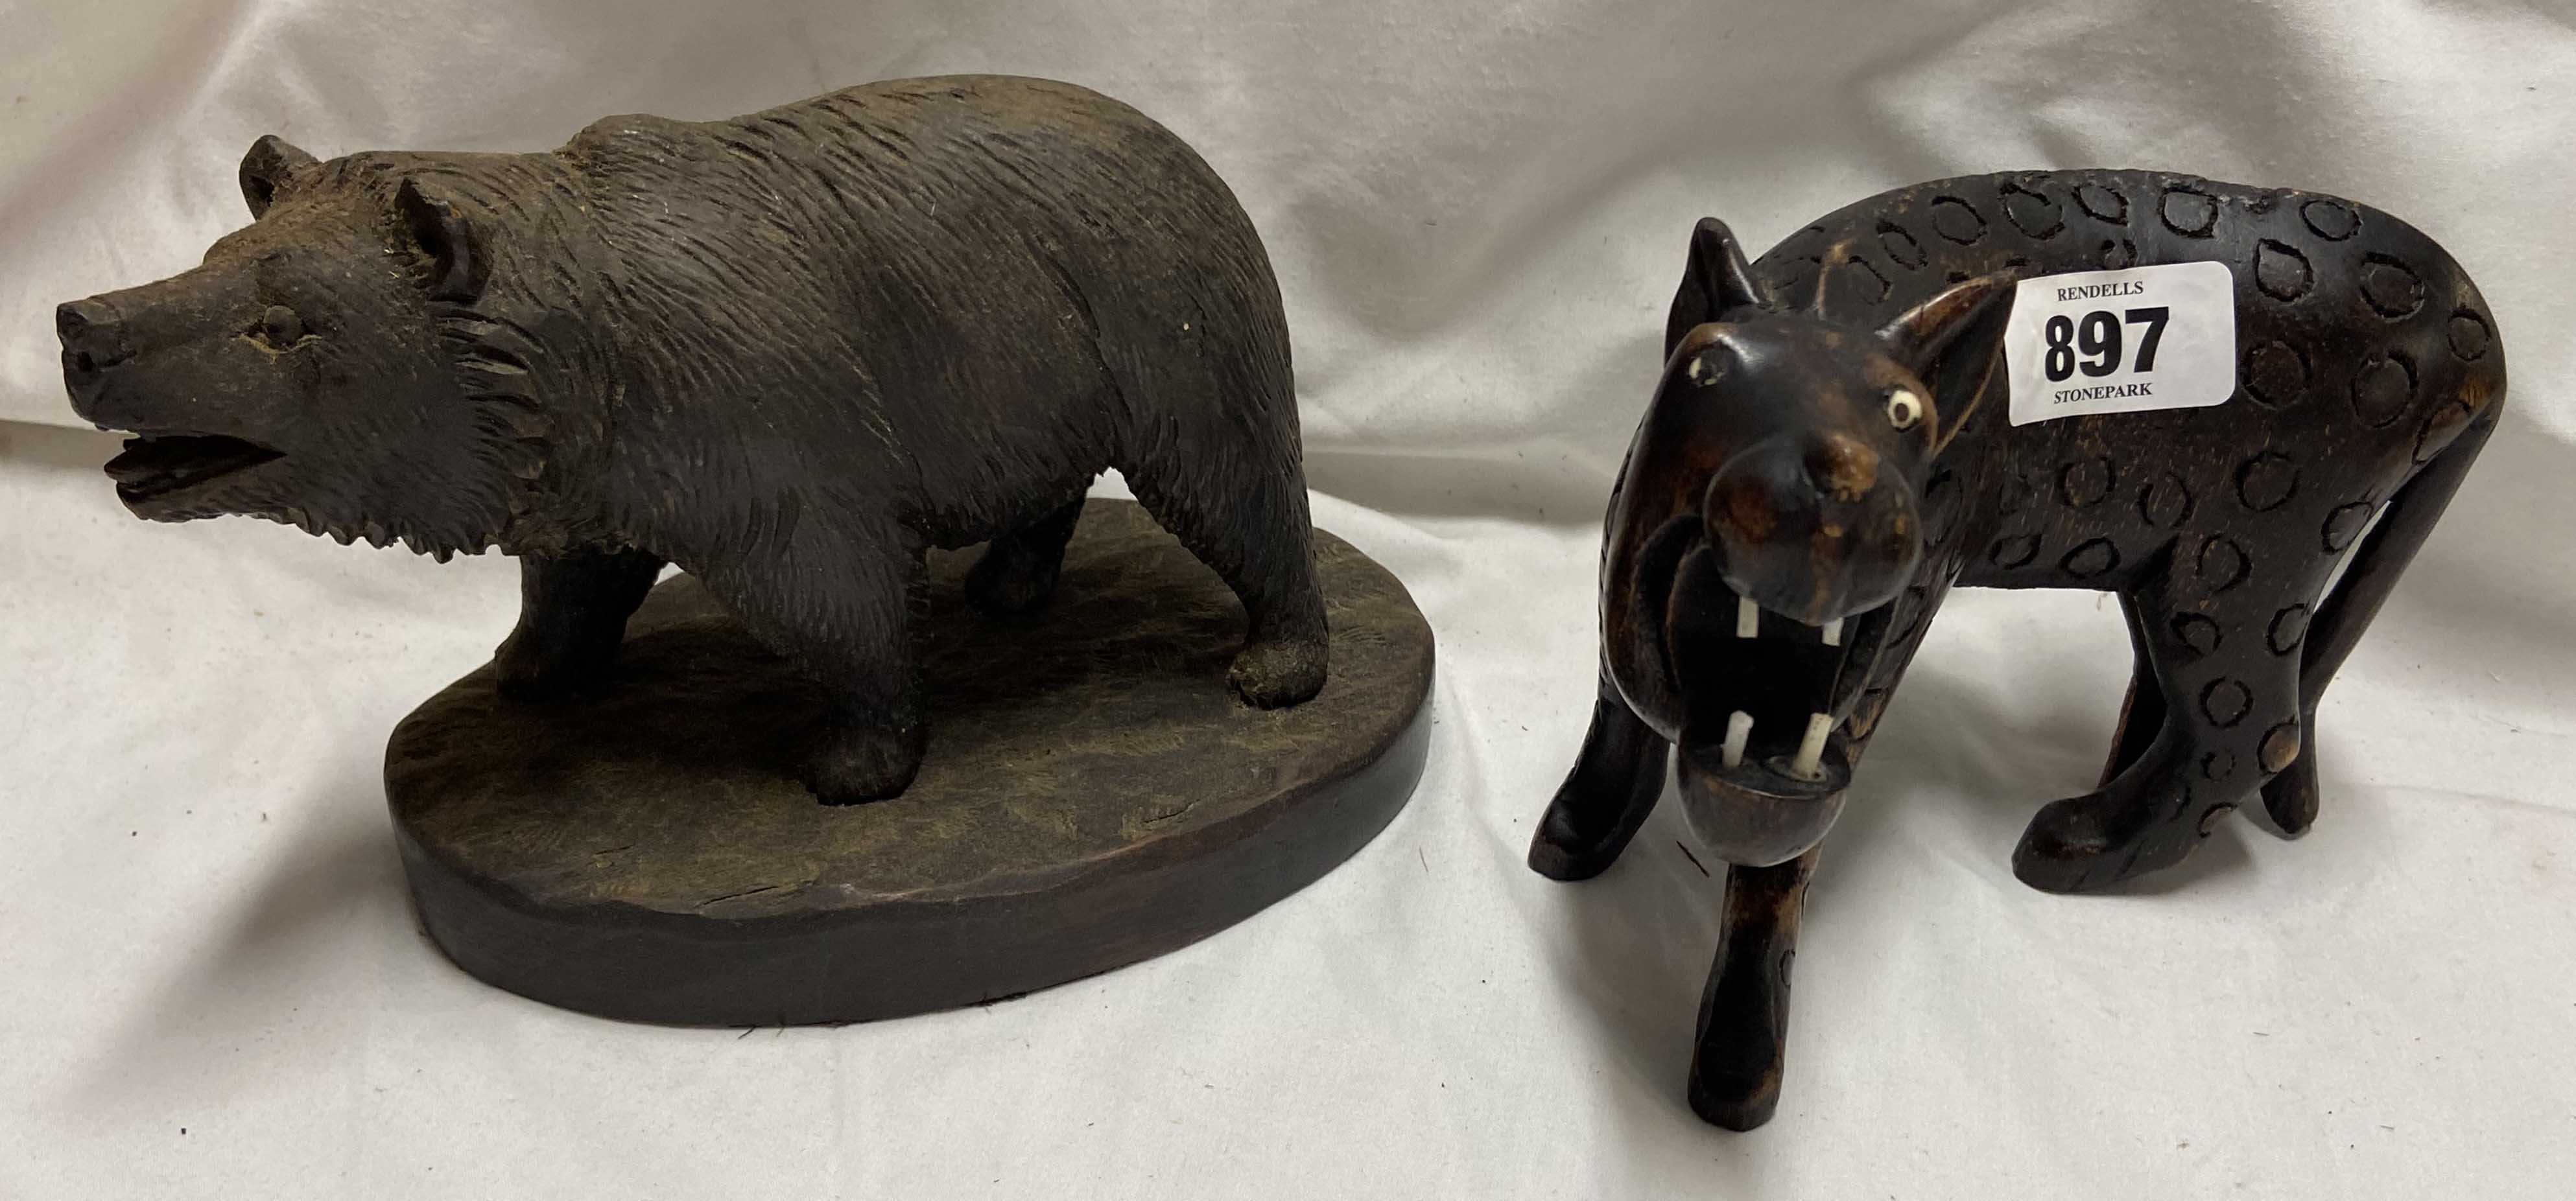 A Black Forrest carved wood bear - sold with a carved hardwood figure, depicting a primitive